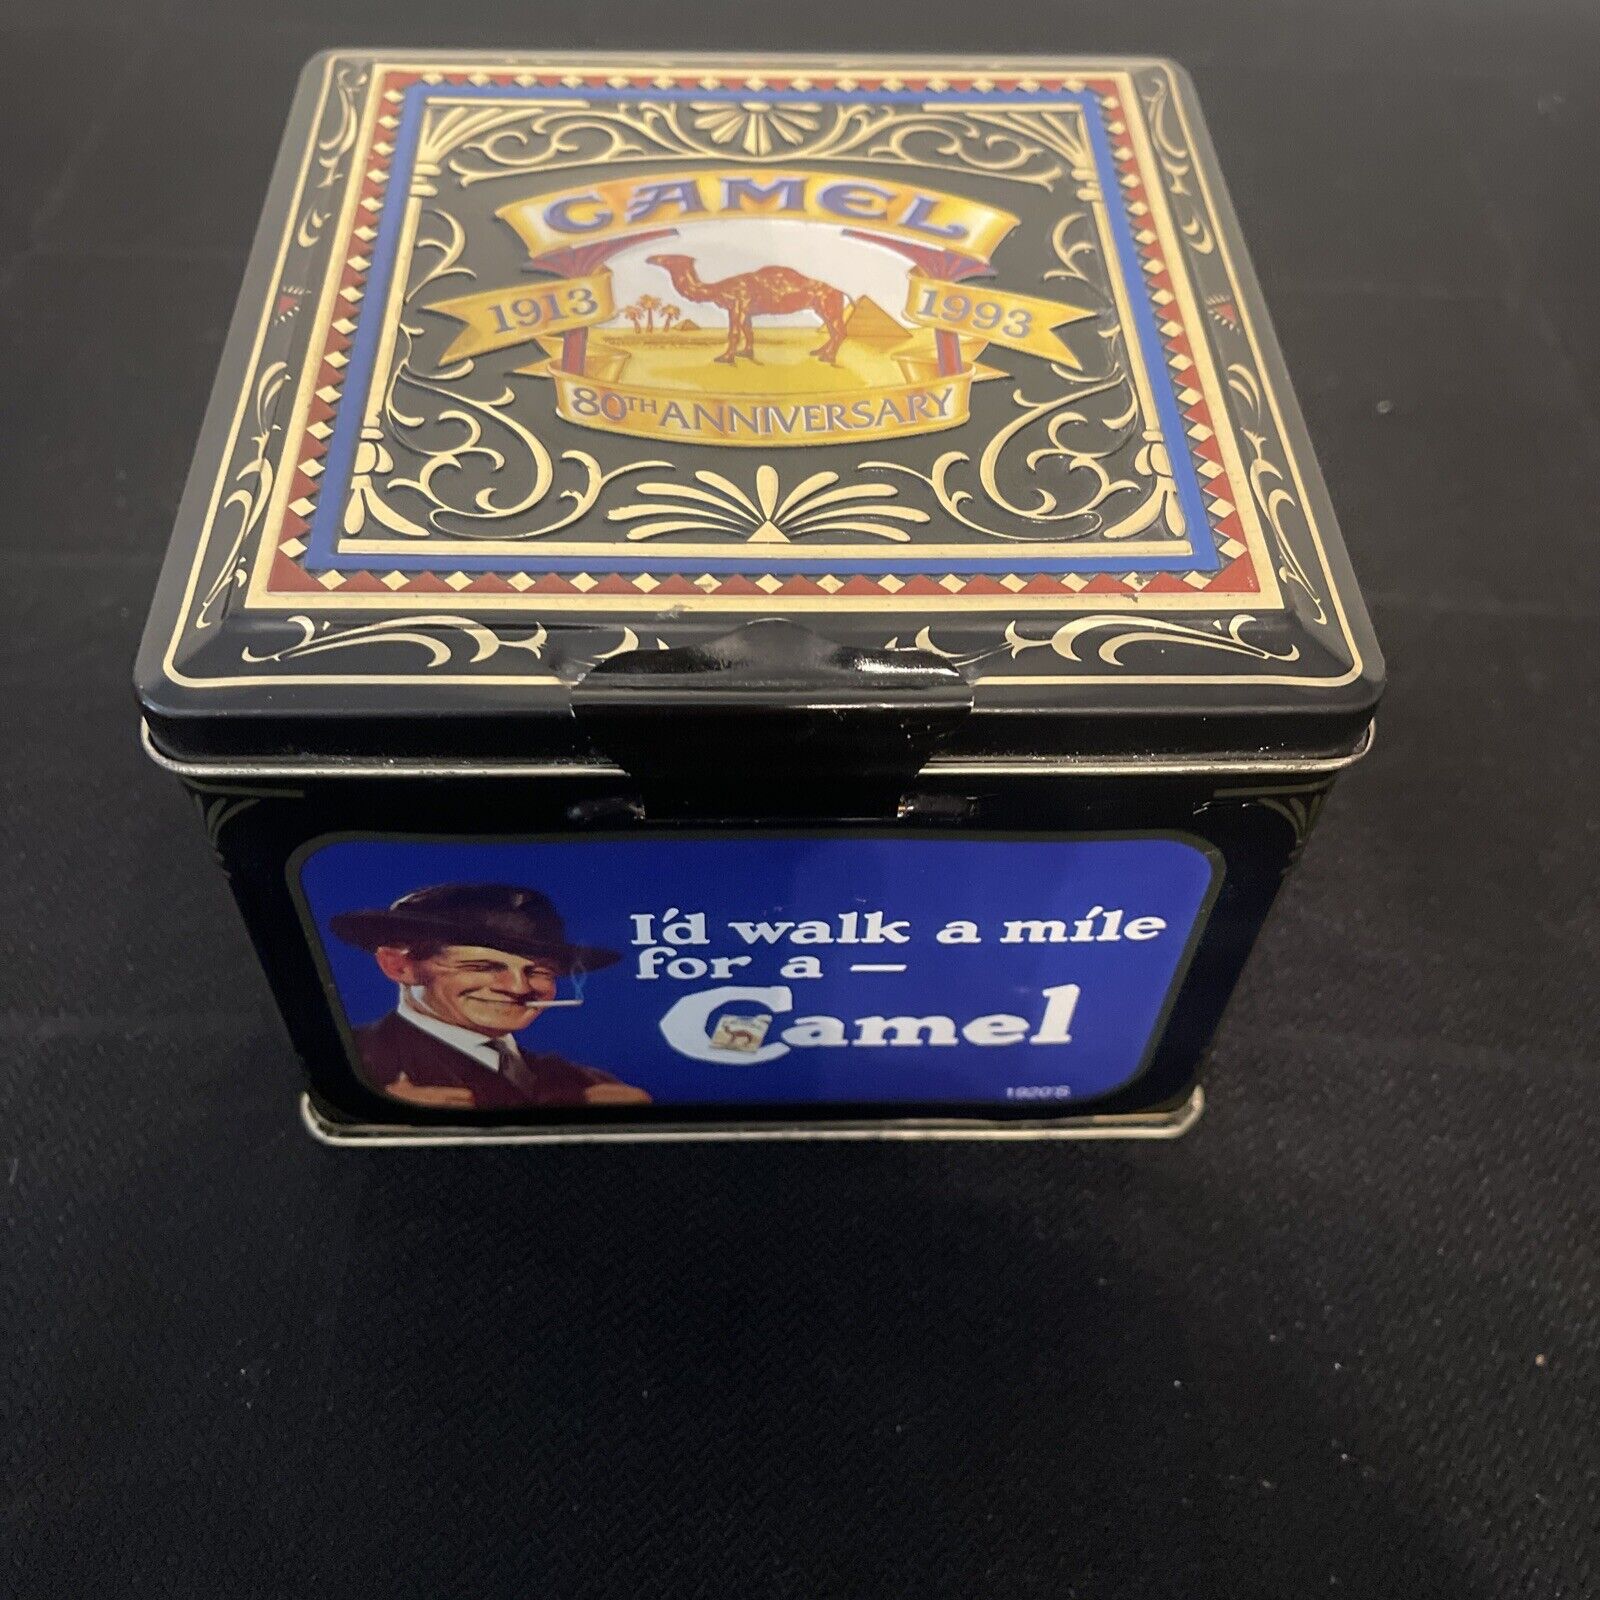 80th Anniversary Camel Advertising Tin Joe Camel Poker Chips